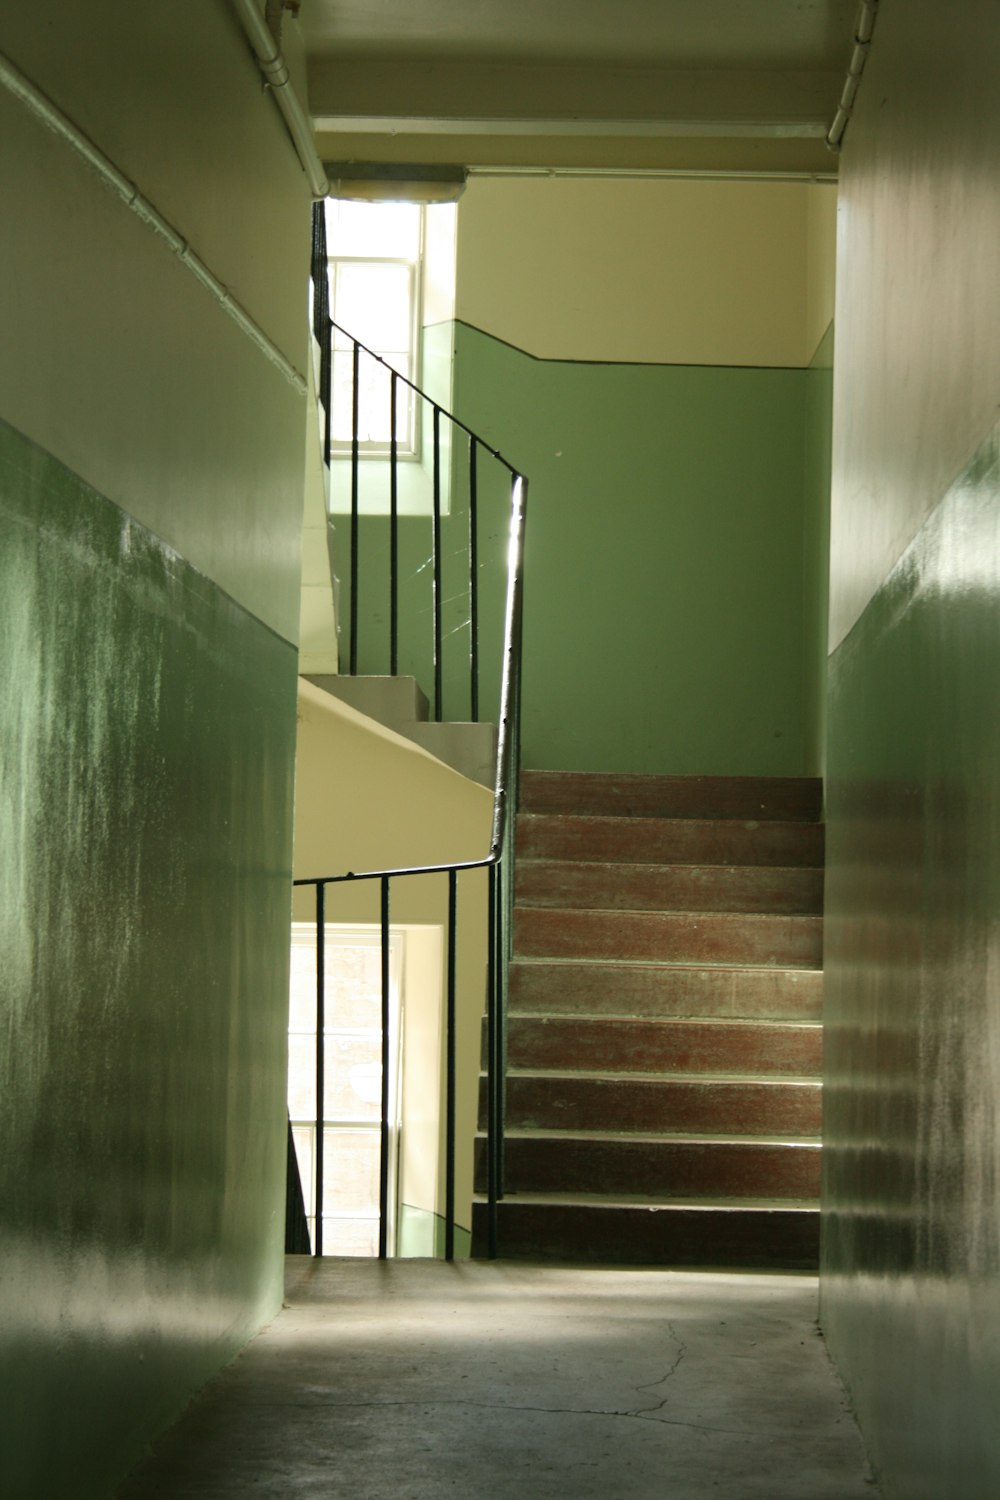 Escalier en béton vert et jaune